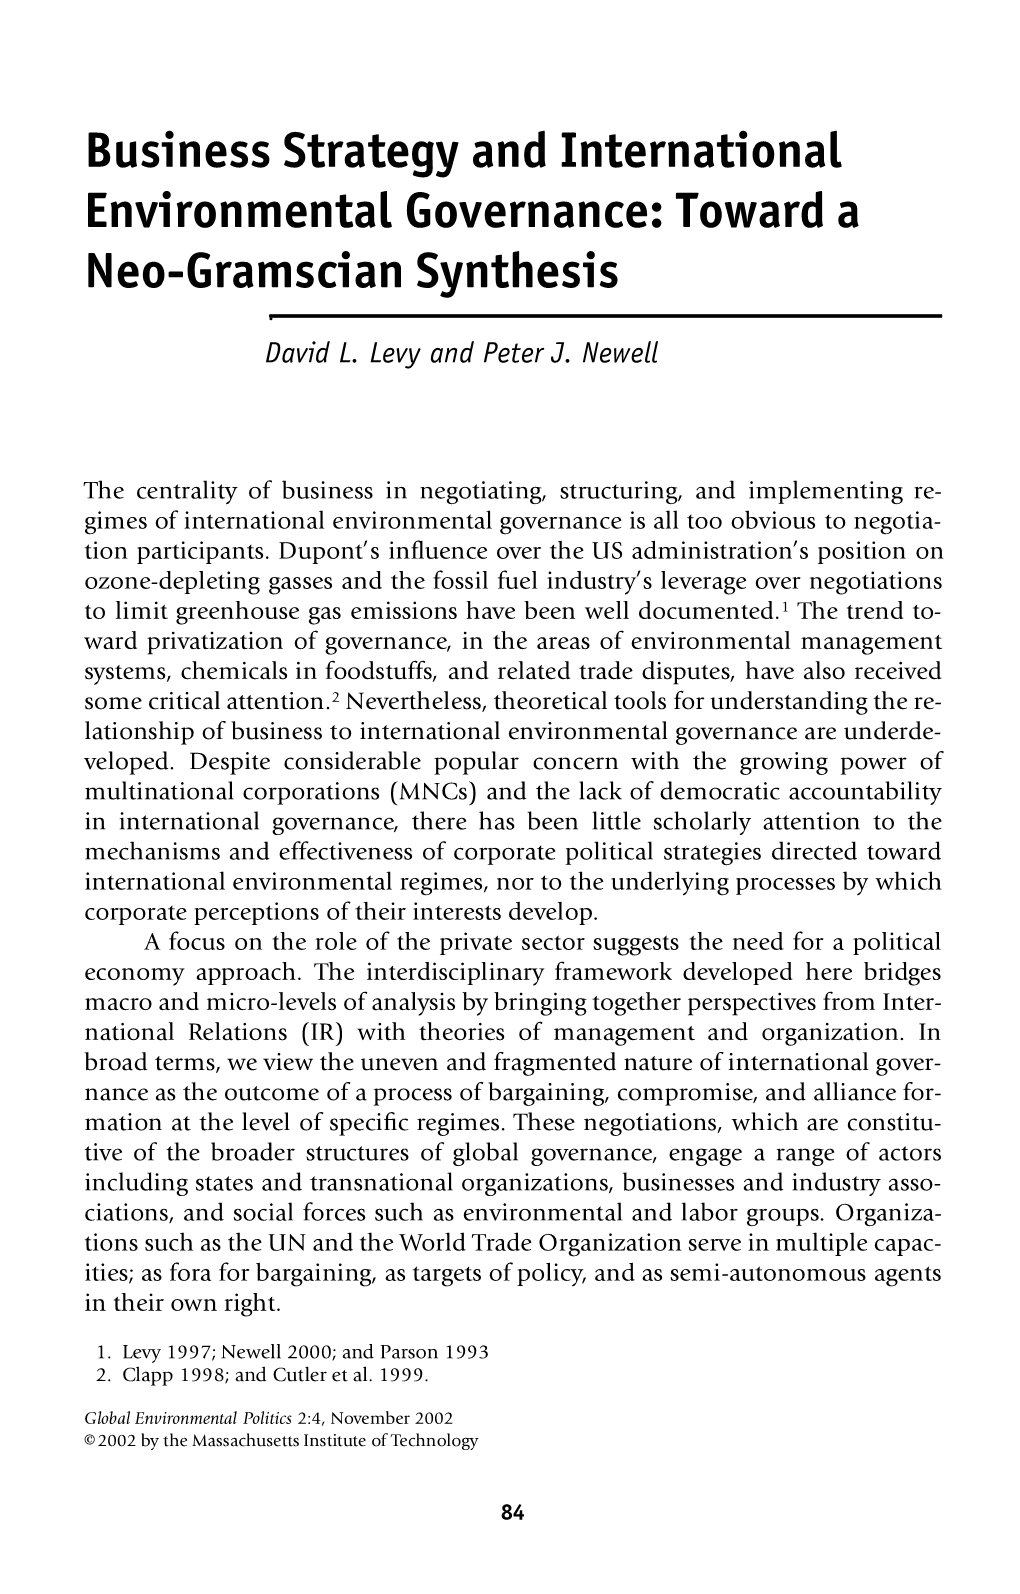 Business Strategy and International Environmental Governance: Towarda Neo-Gramscian Synthesis · David L